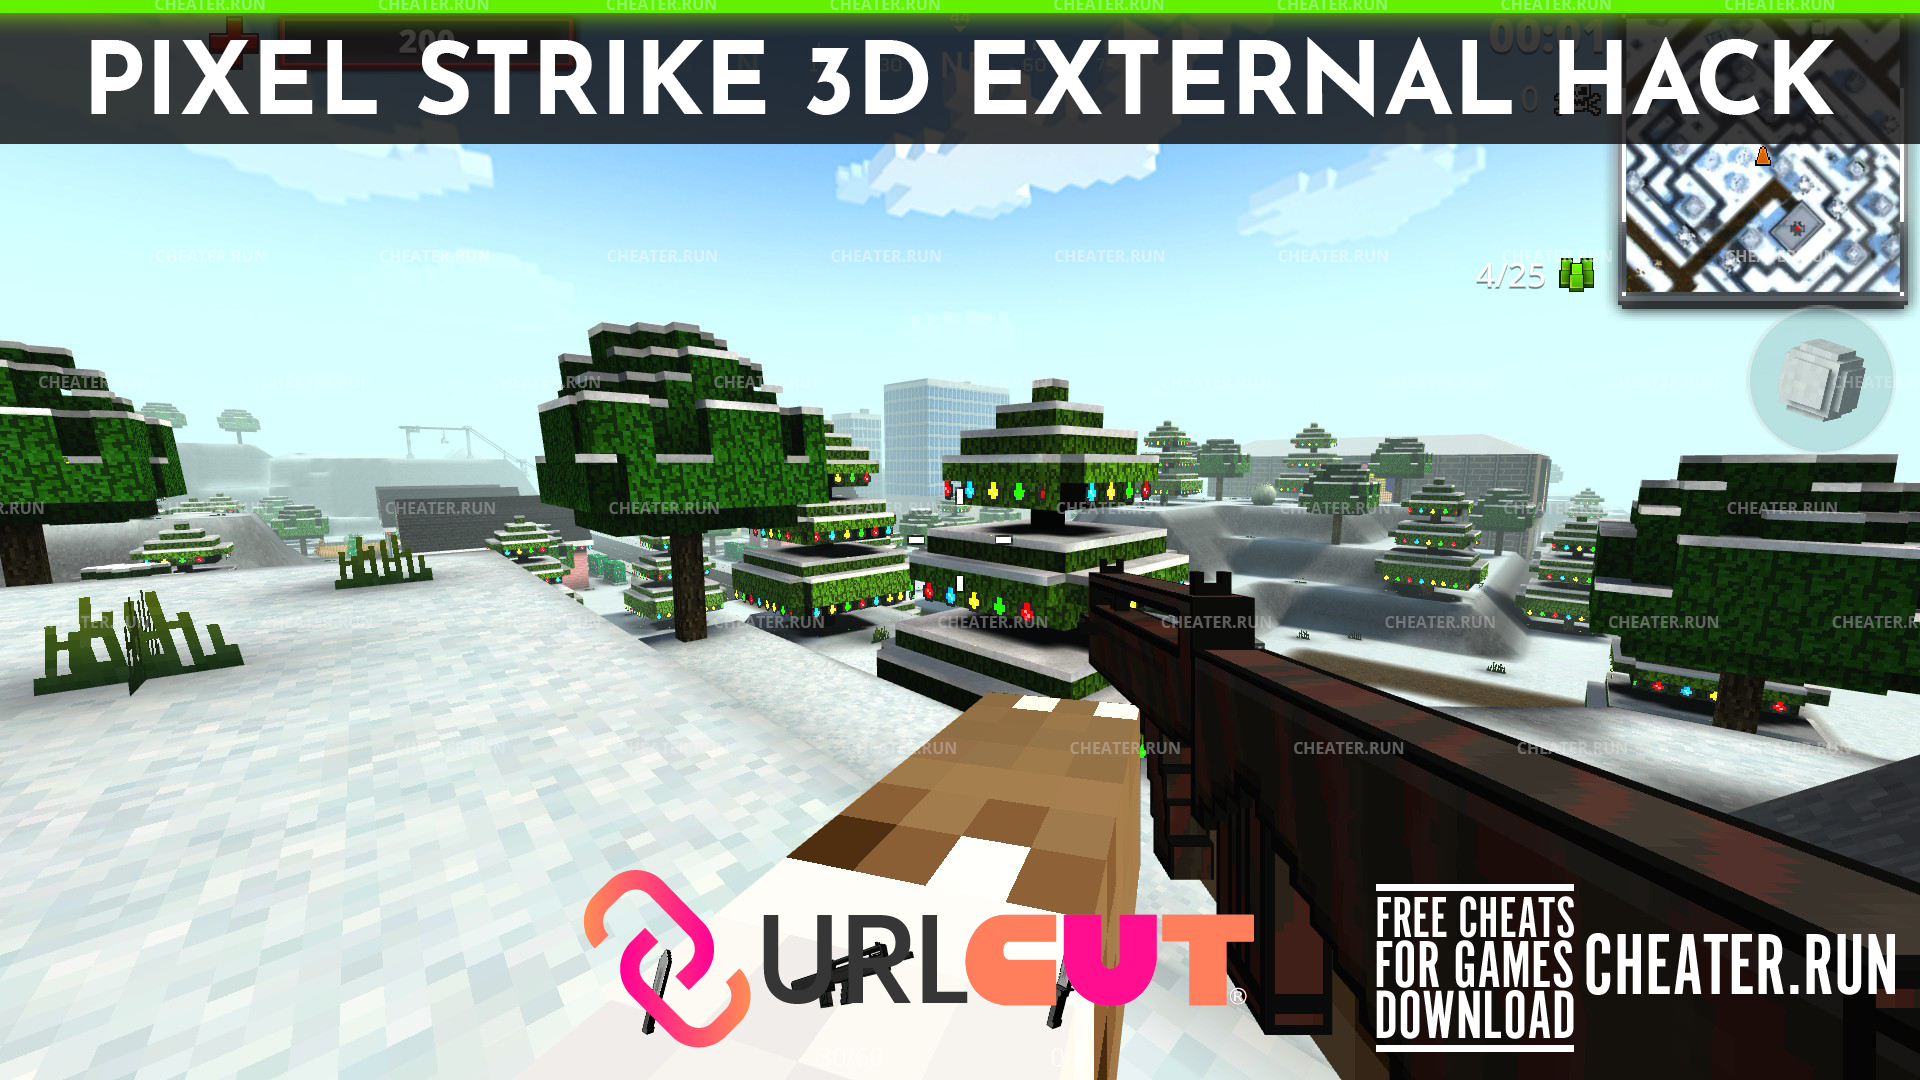  		  Pixel Strike 3D External Hack (Steam)  		                                                                                                                  	   